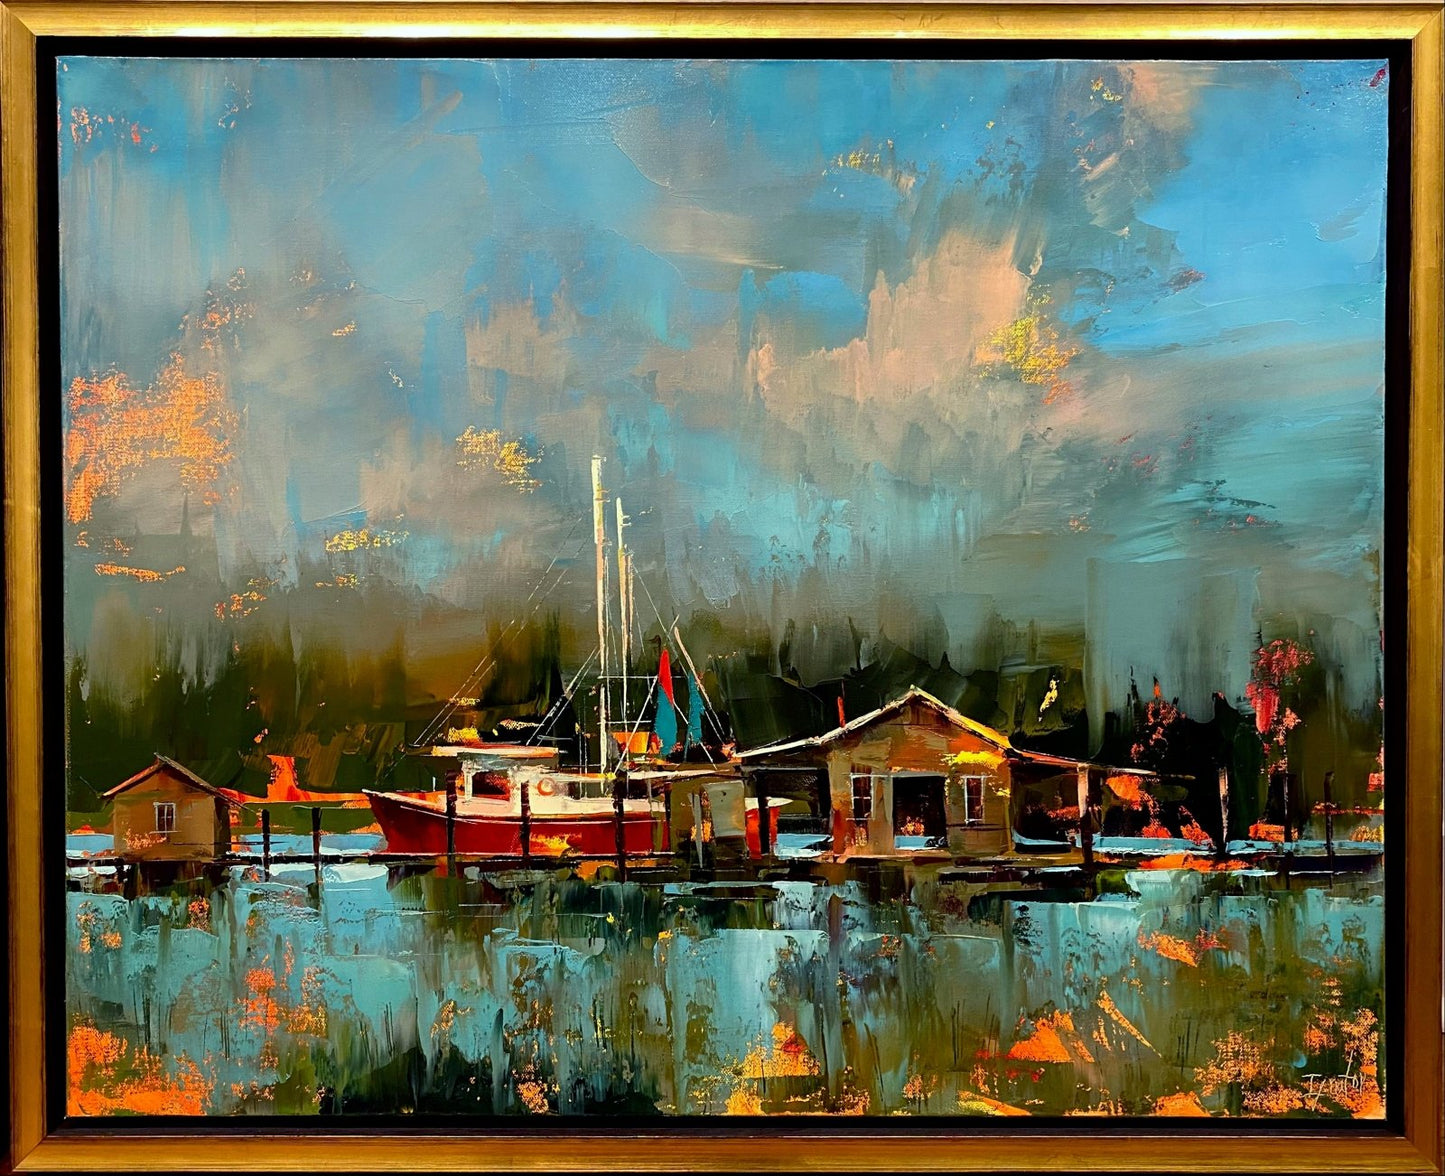 Shem Creek Docks by Ignat Ignatov at LePrince Galleries